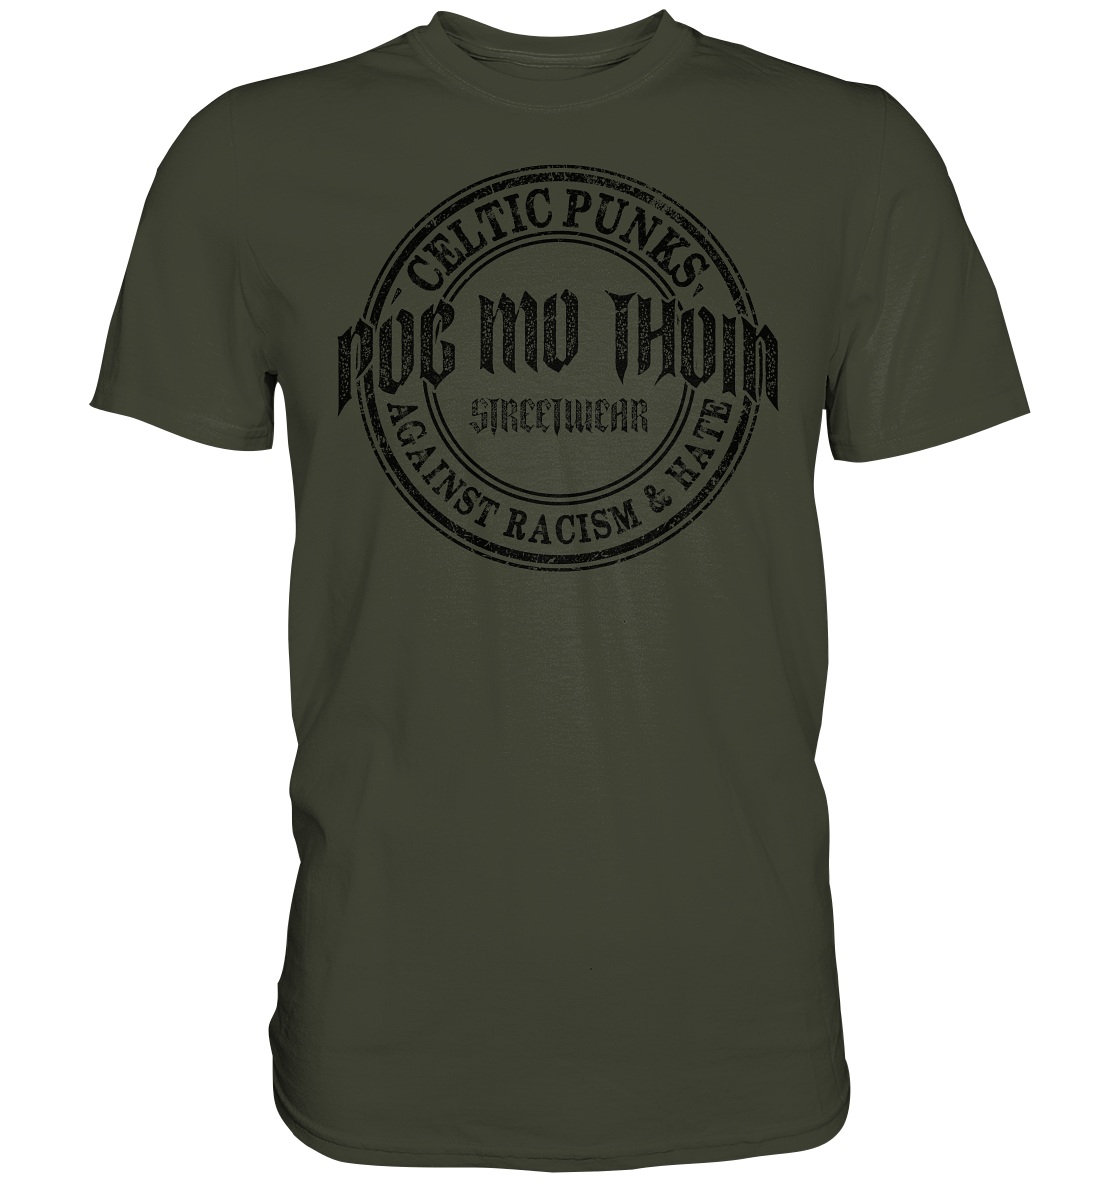 Póg Mo Thóin Streetwear "Celtic Punks Against Racism & Hate" - Premium Shirt